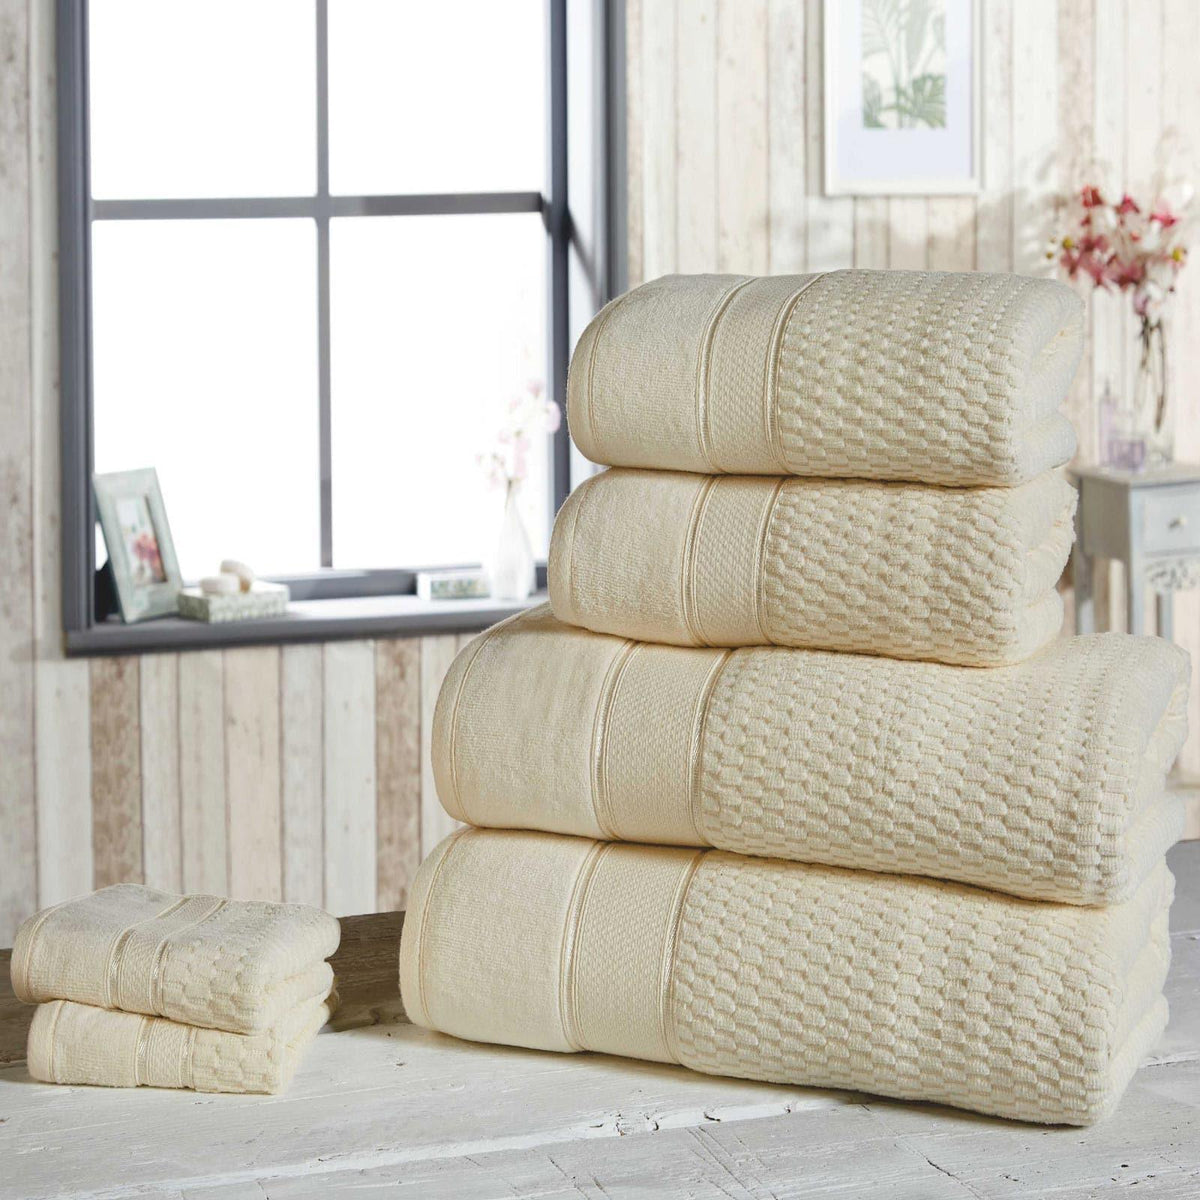 Royal Velvet Cream 6 Piece Towel Bale Set – Ideal